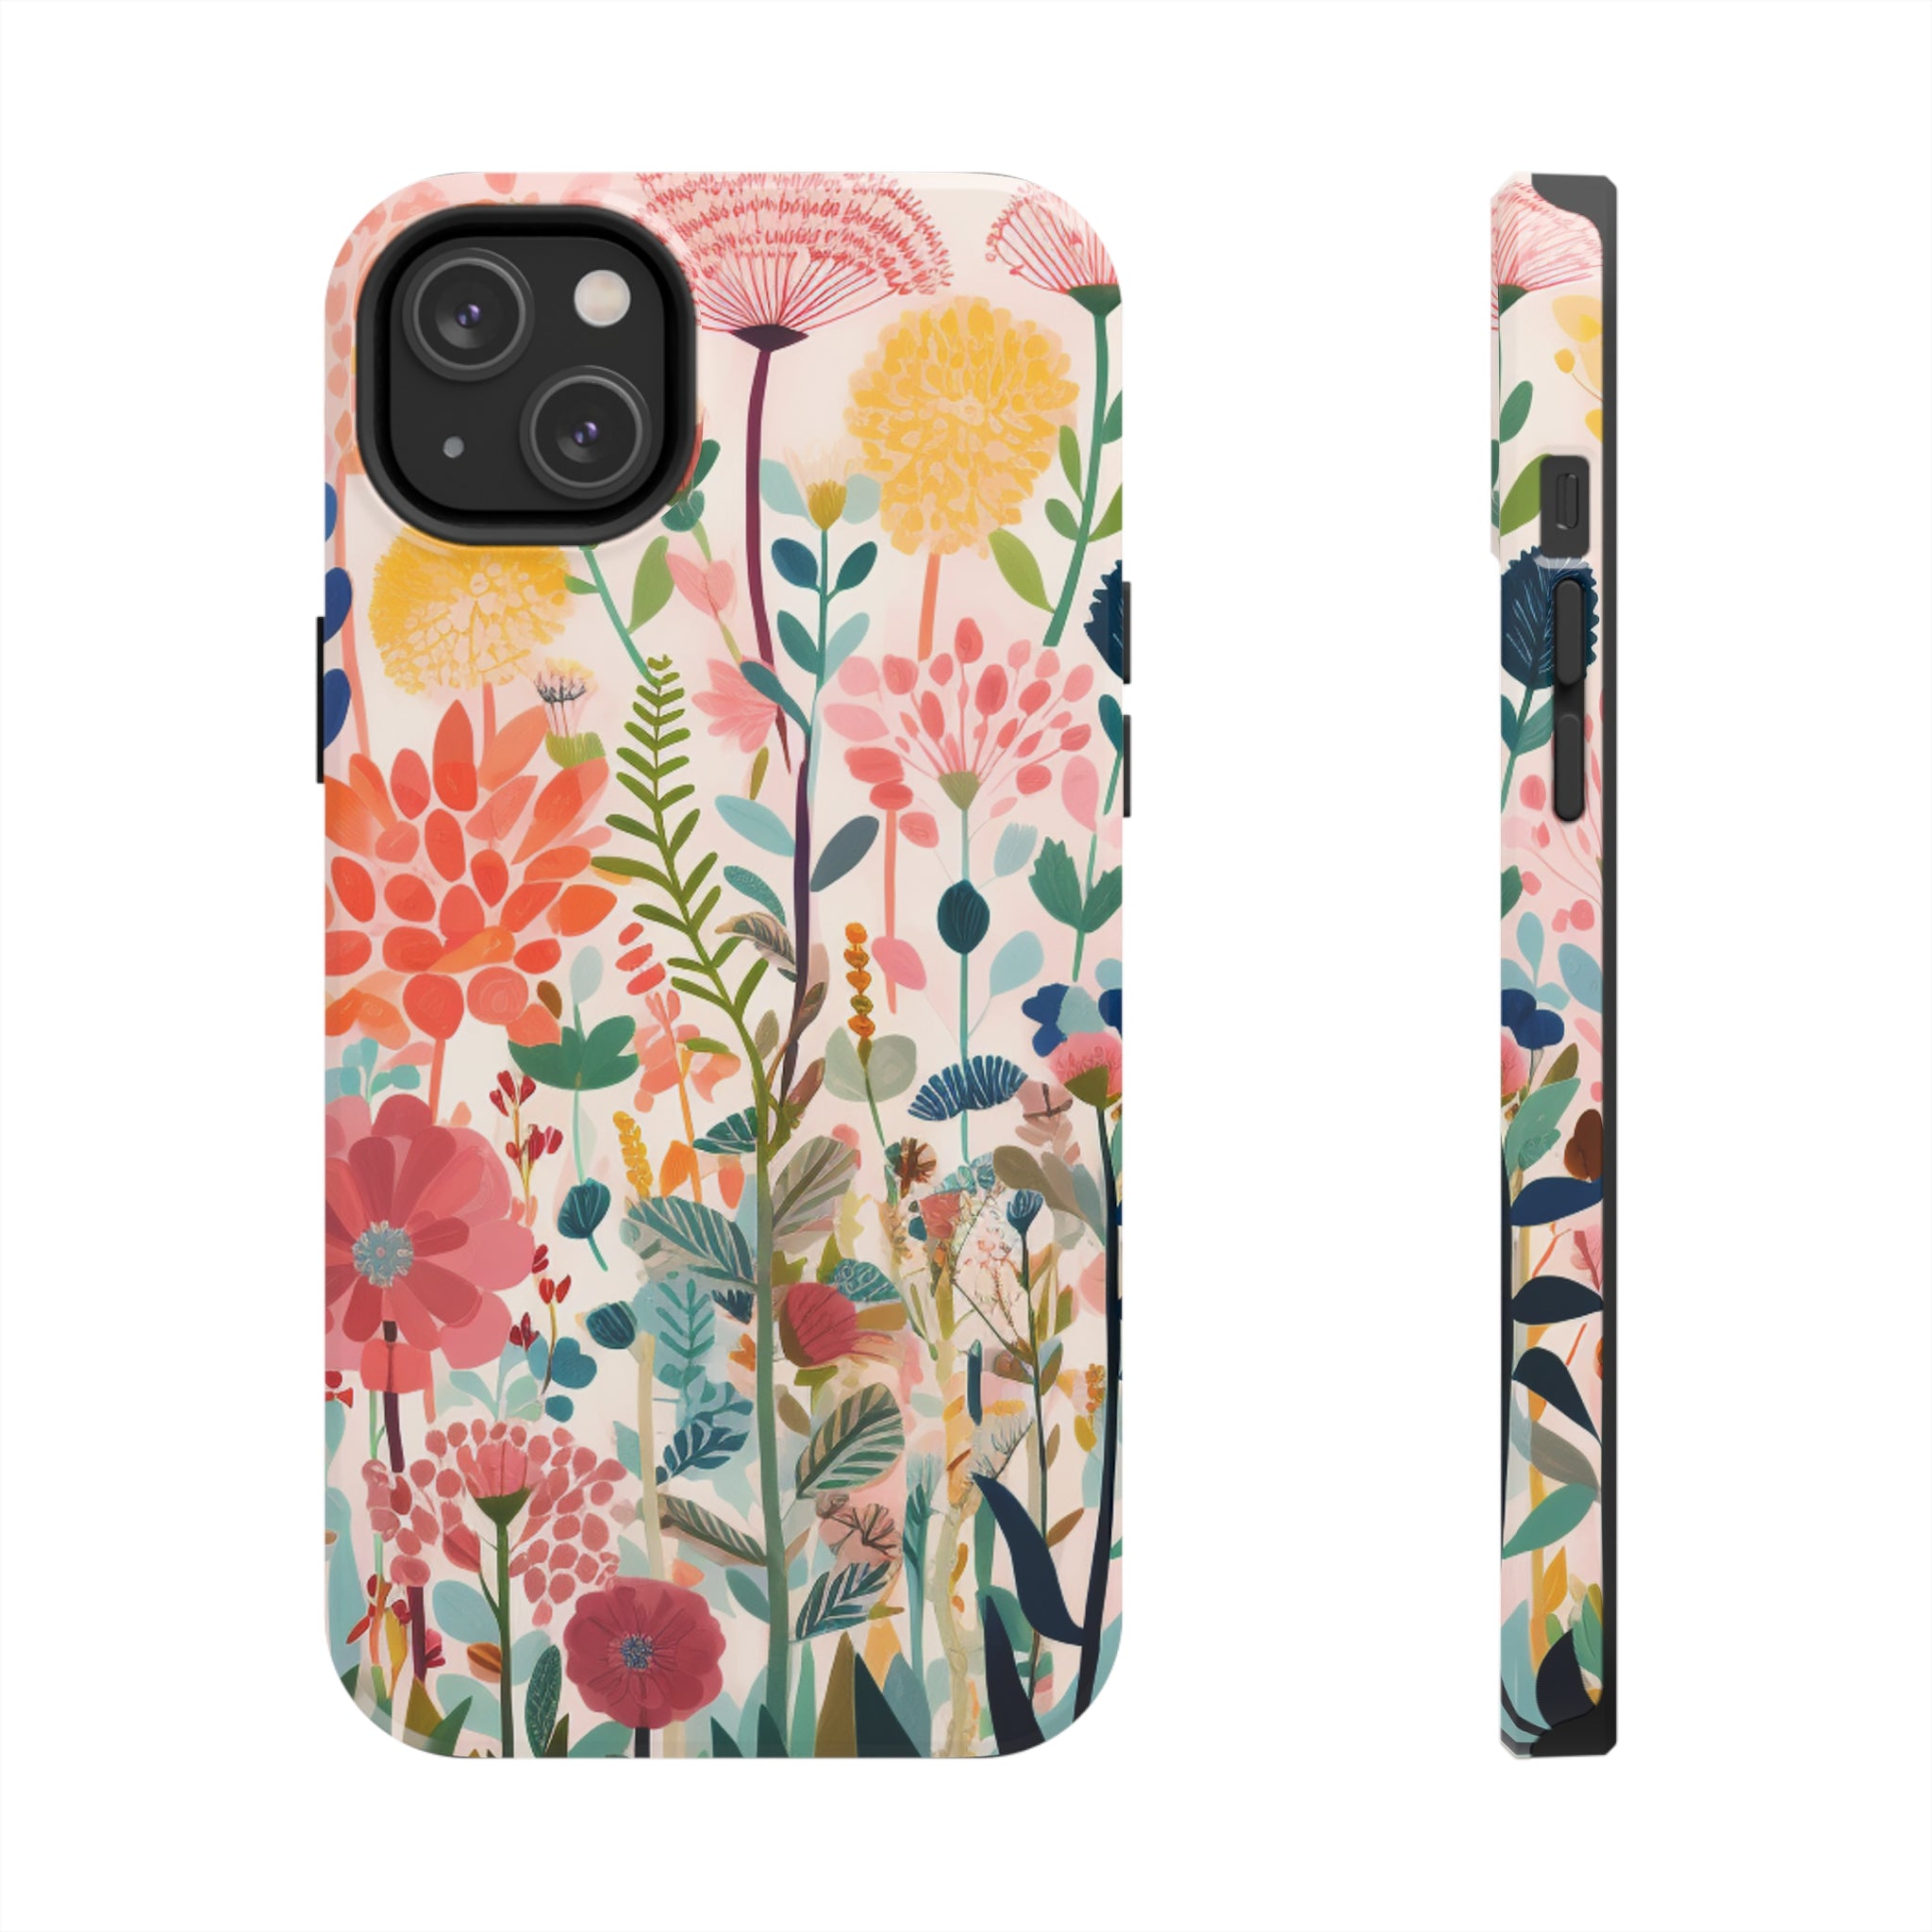 Flower Season - iPhone Tough Cases